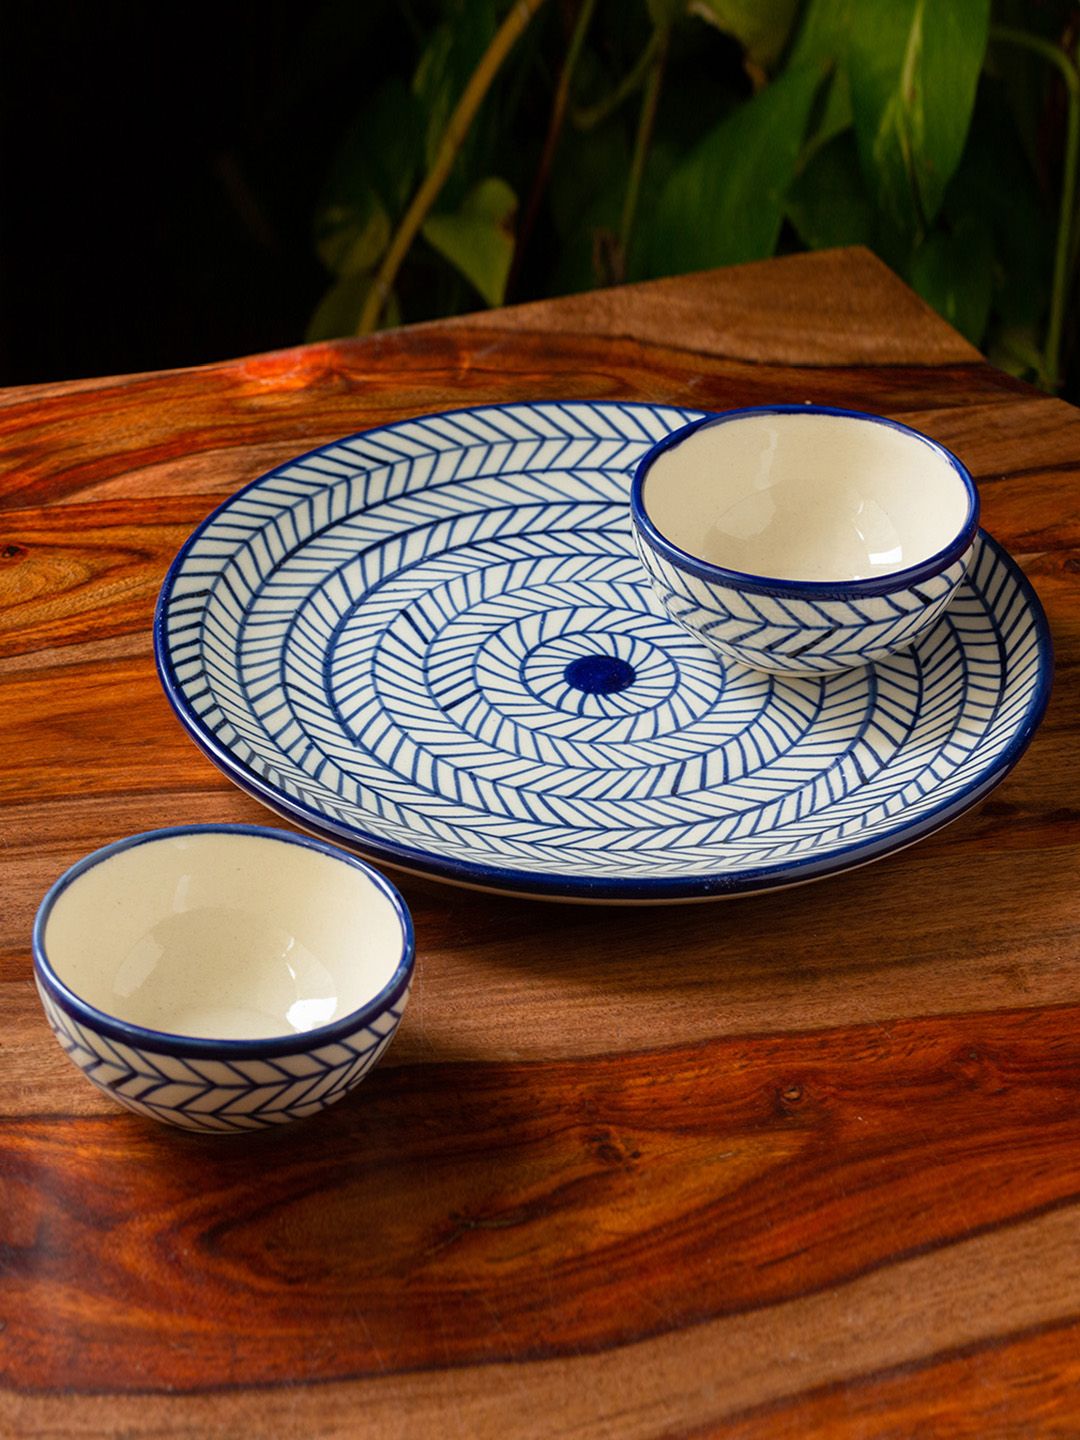 ExclusiveLane Set Of 3 Blue & White Hand-Painted Ceramic Plate & Katoris Price in India